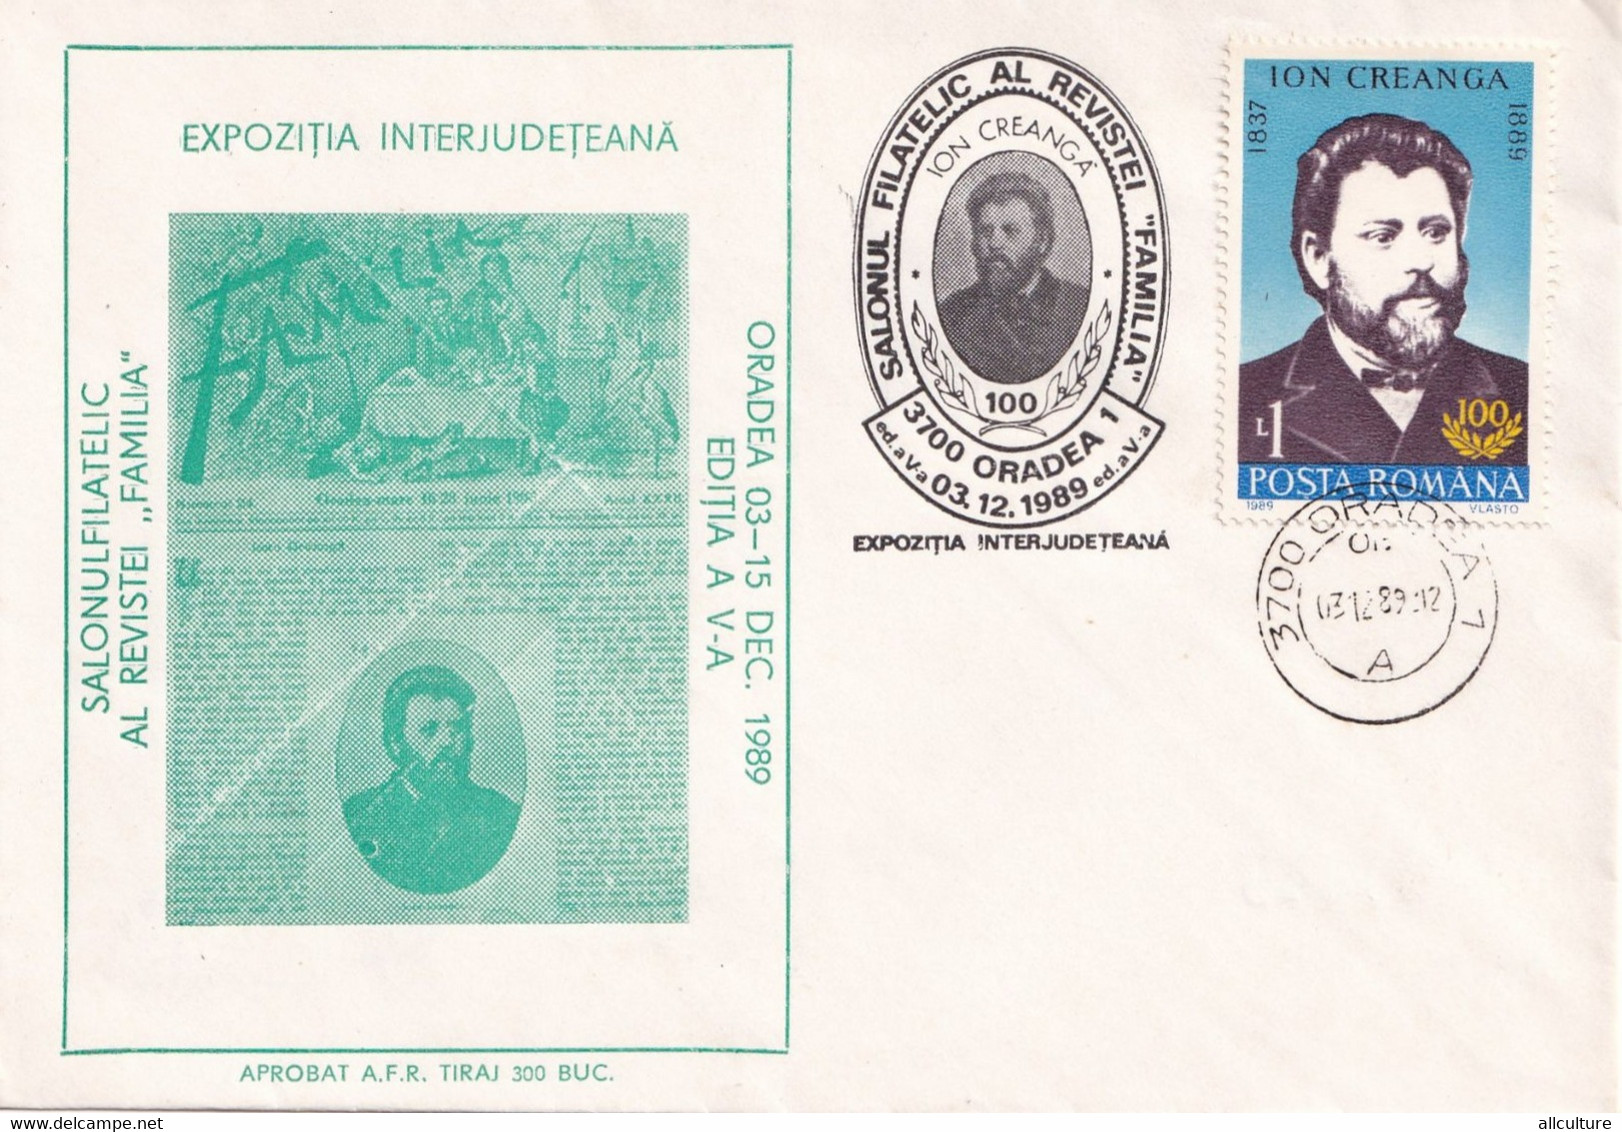 A3017 - Ion Creanga, Scriitor Roman, Expozitia Interjudeteana Oradea 1989 Republica Socialista Romania Posta Romana - Briefe U. Dokumente